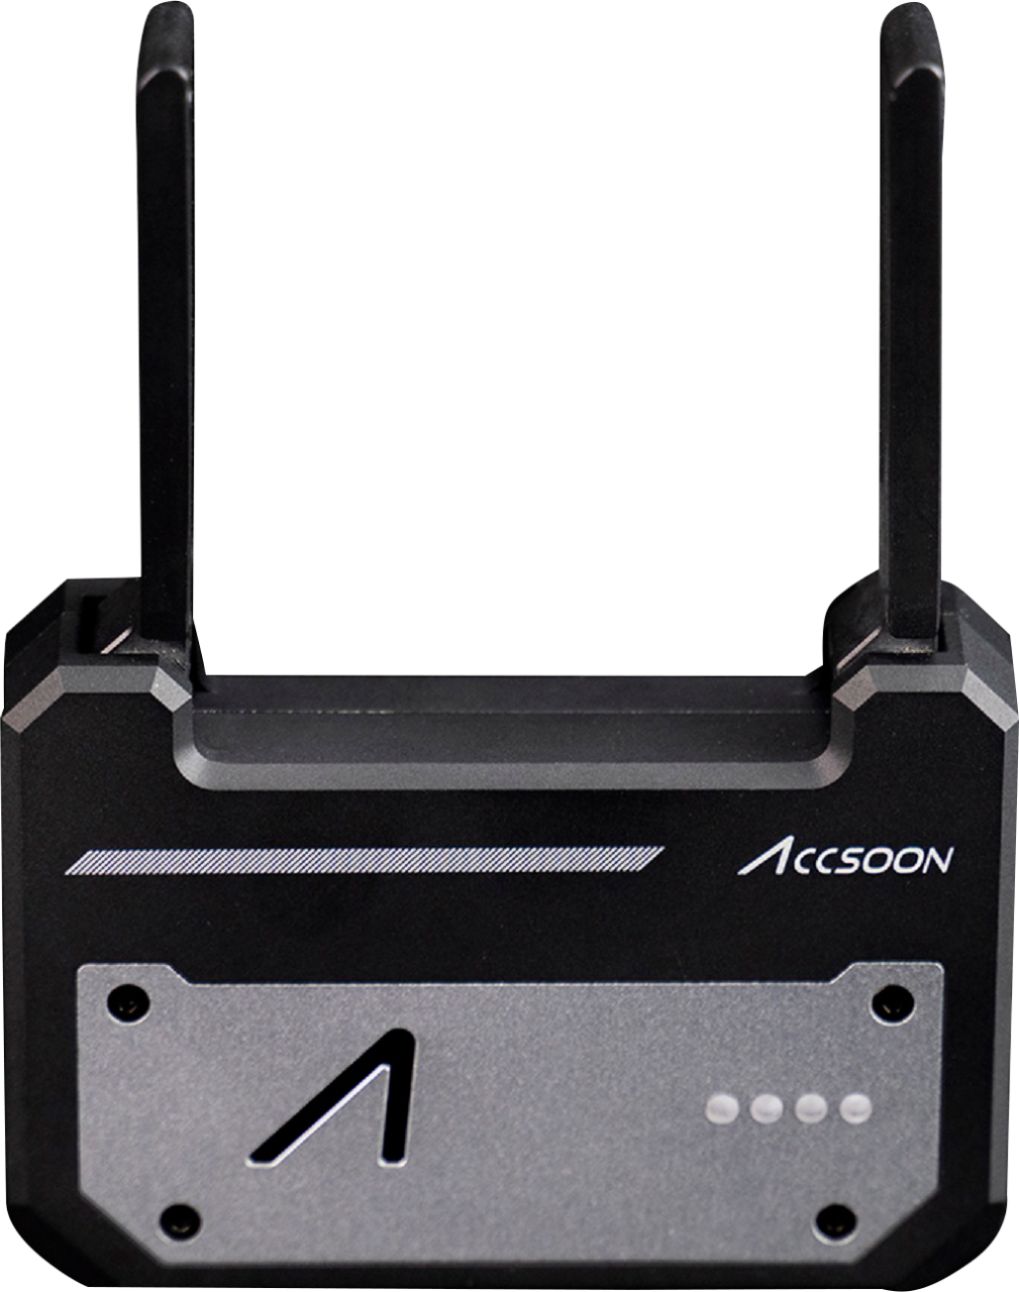 Accsoon - CineEye Wireless Video Transmission System - Black